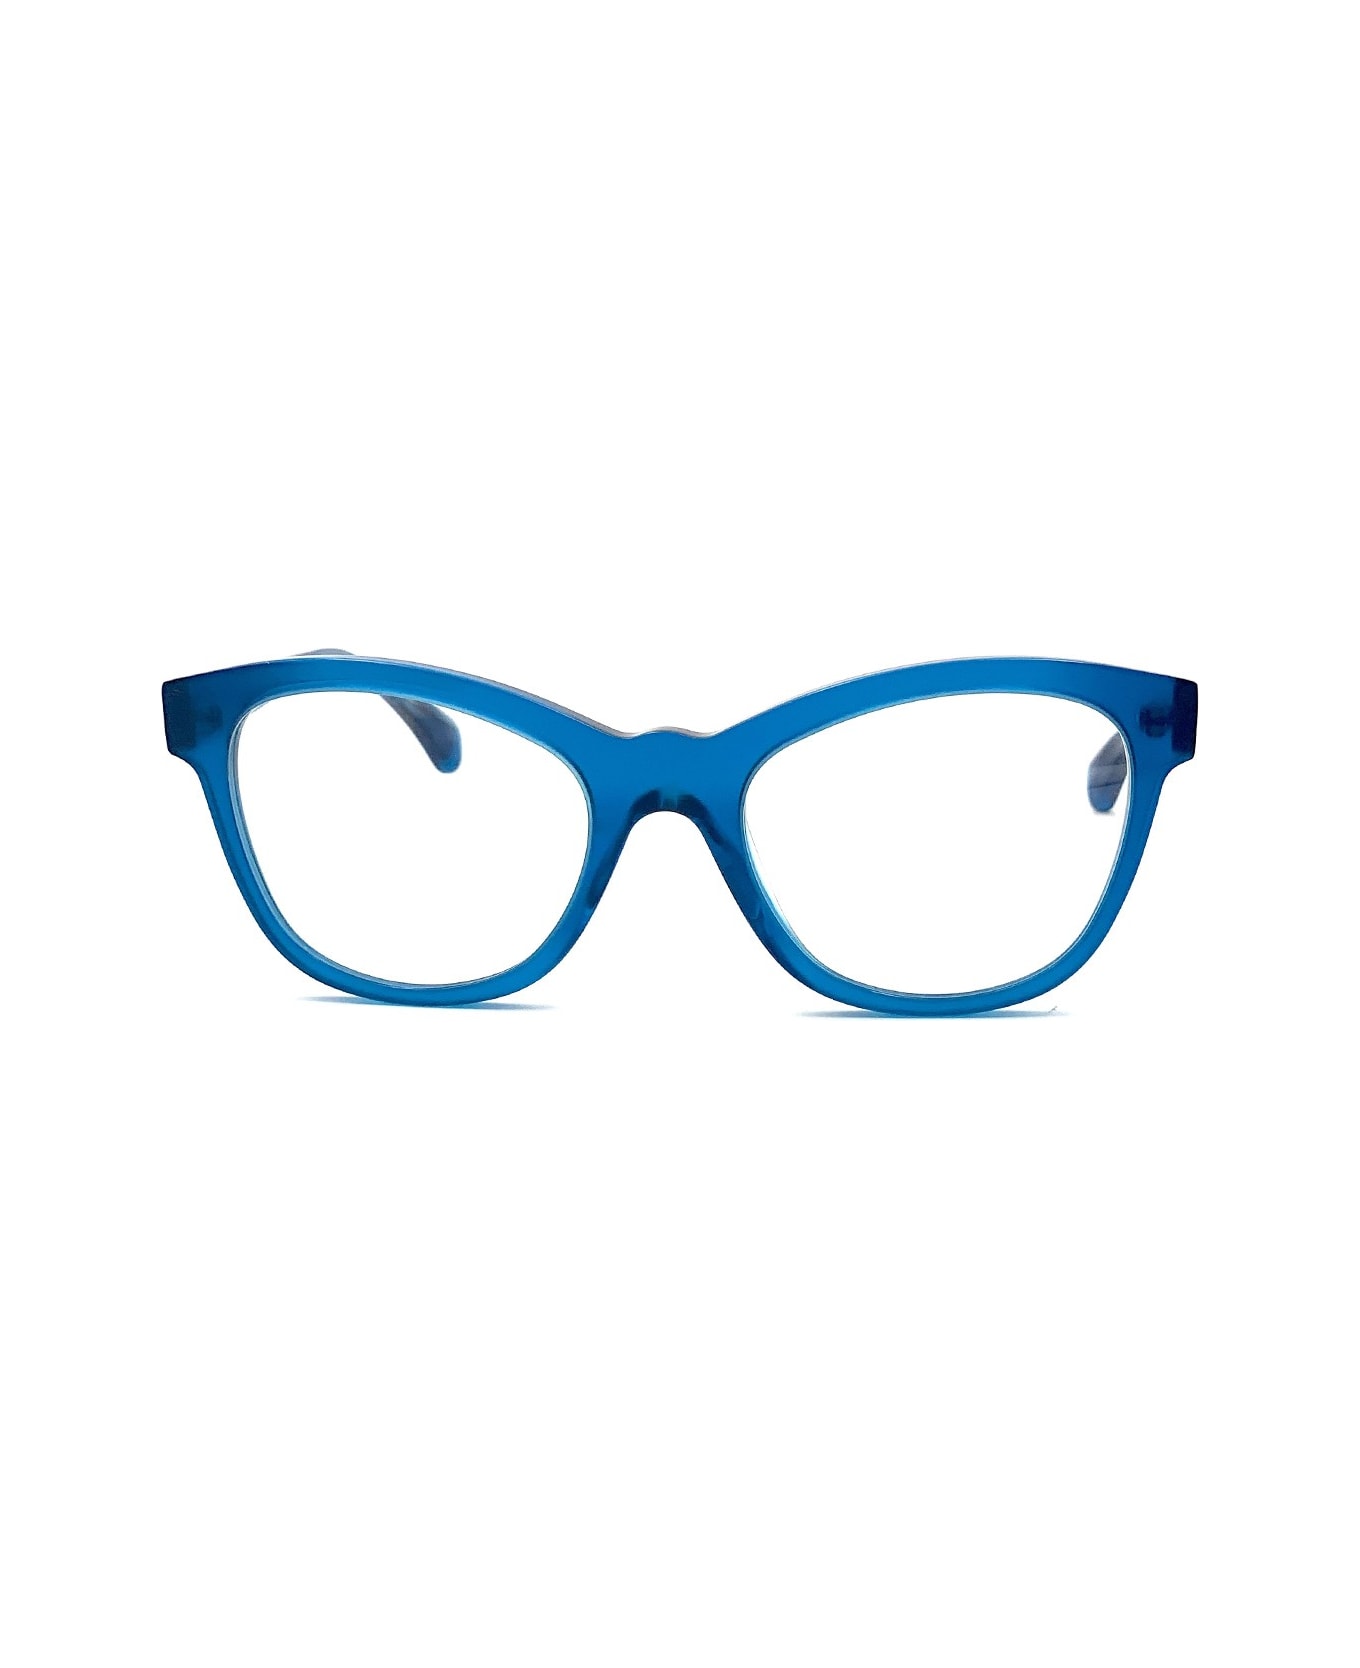 Jacques Durand Porquerolles Xl 169 Glasses - Blu